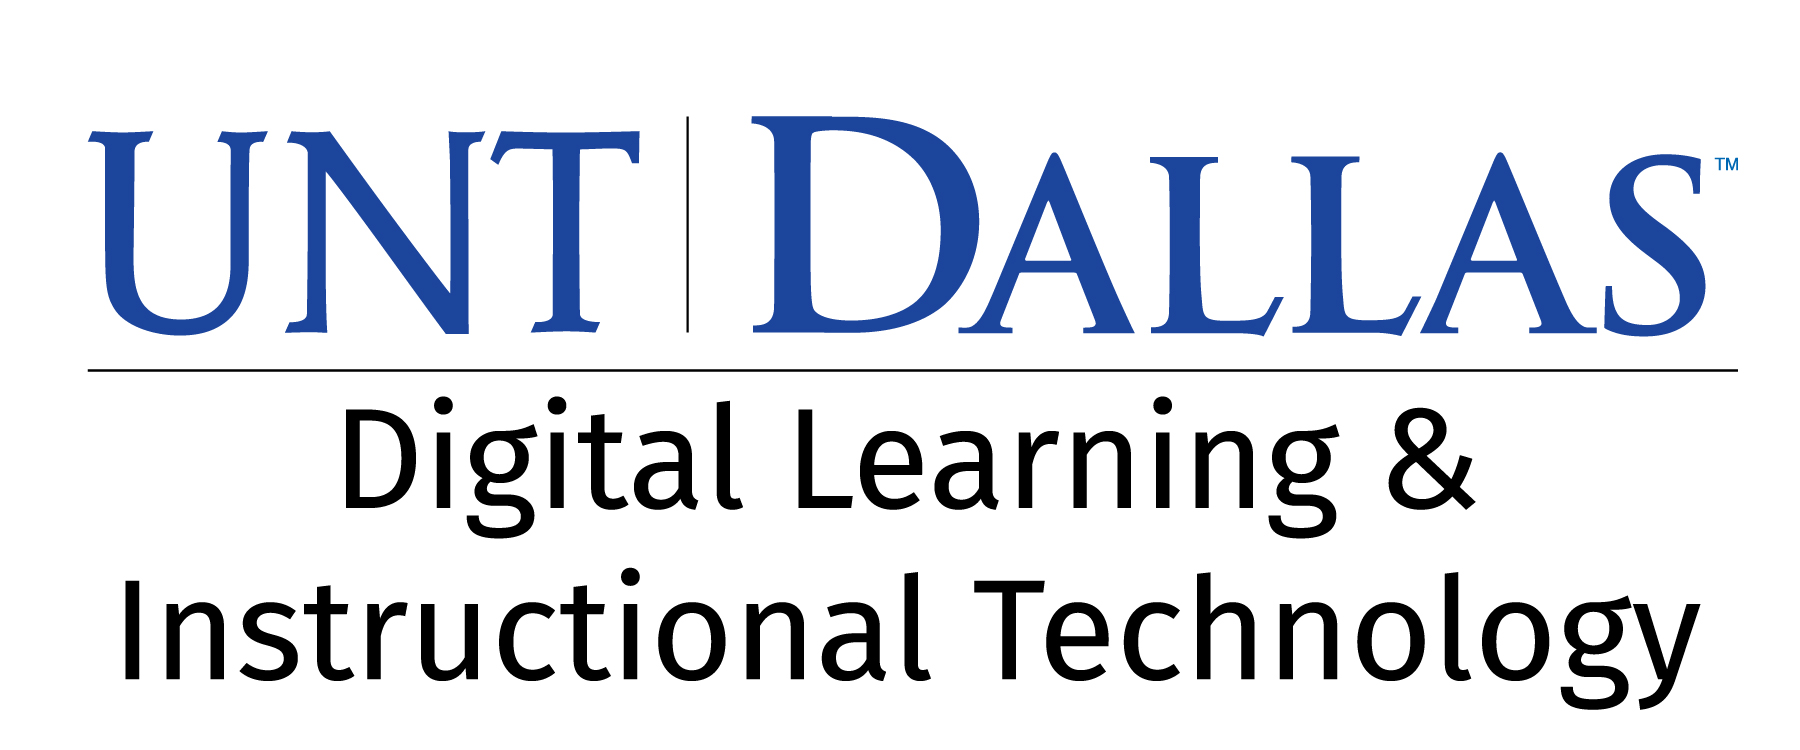 UNT Dallas Office of Digital Learning & Instructional Technology Logo